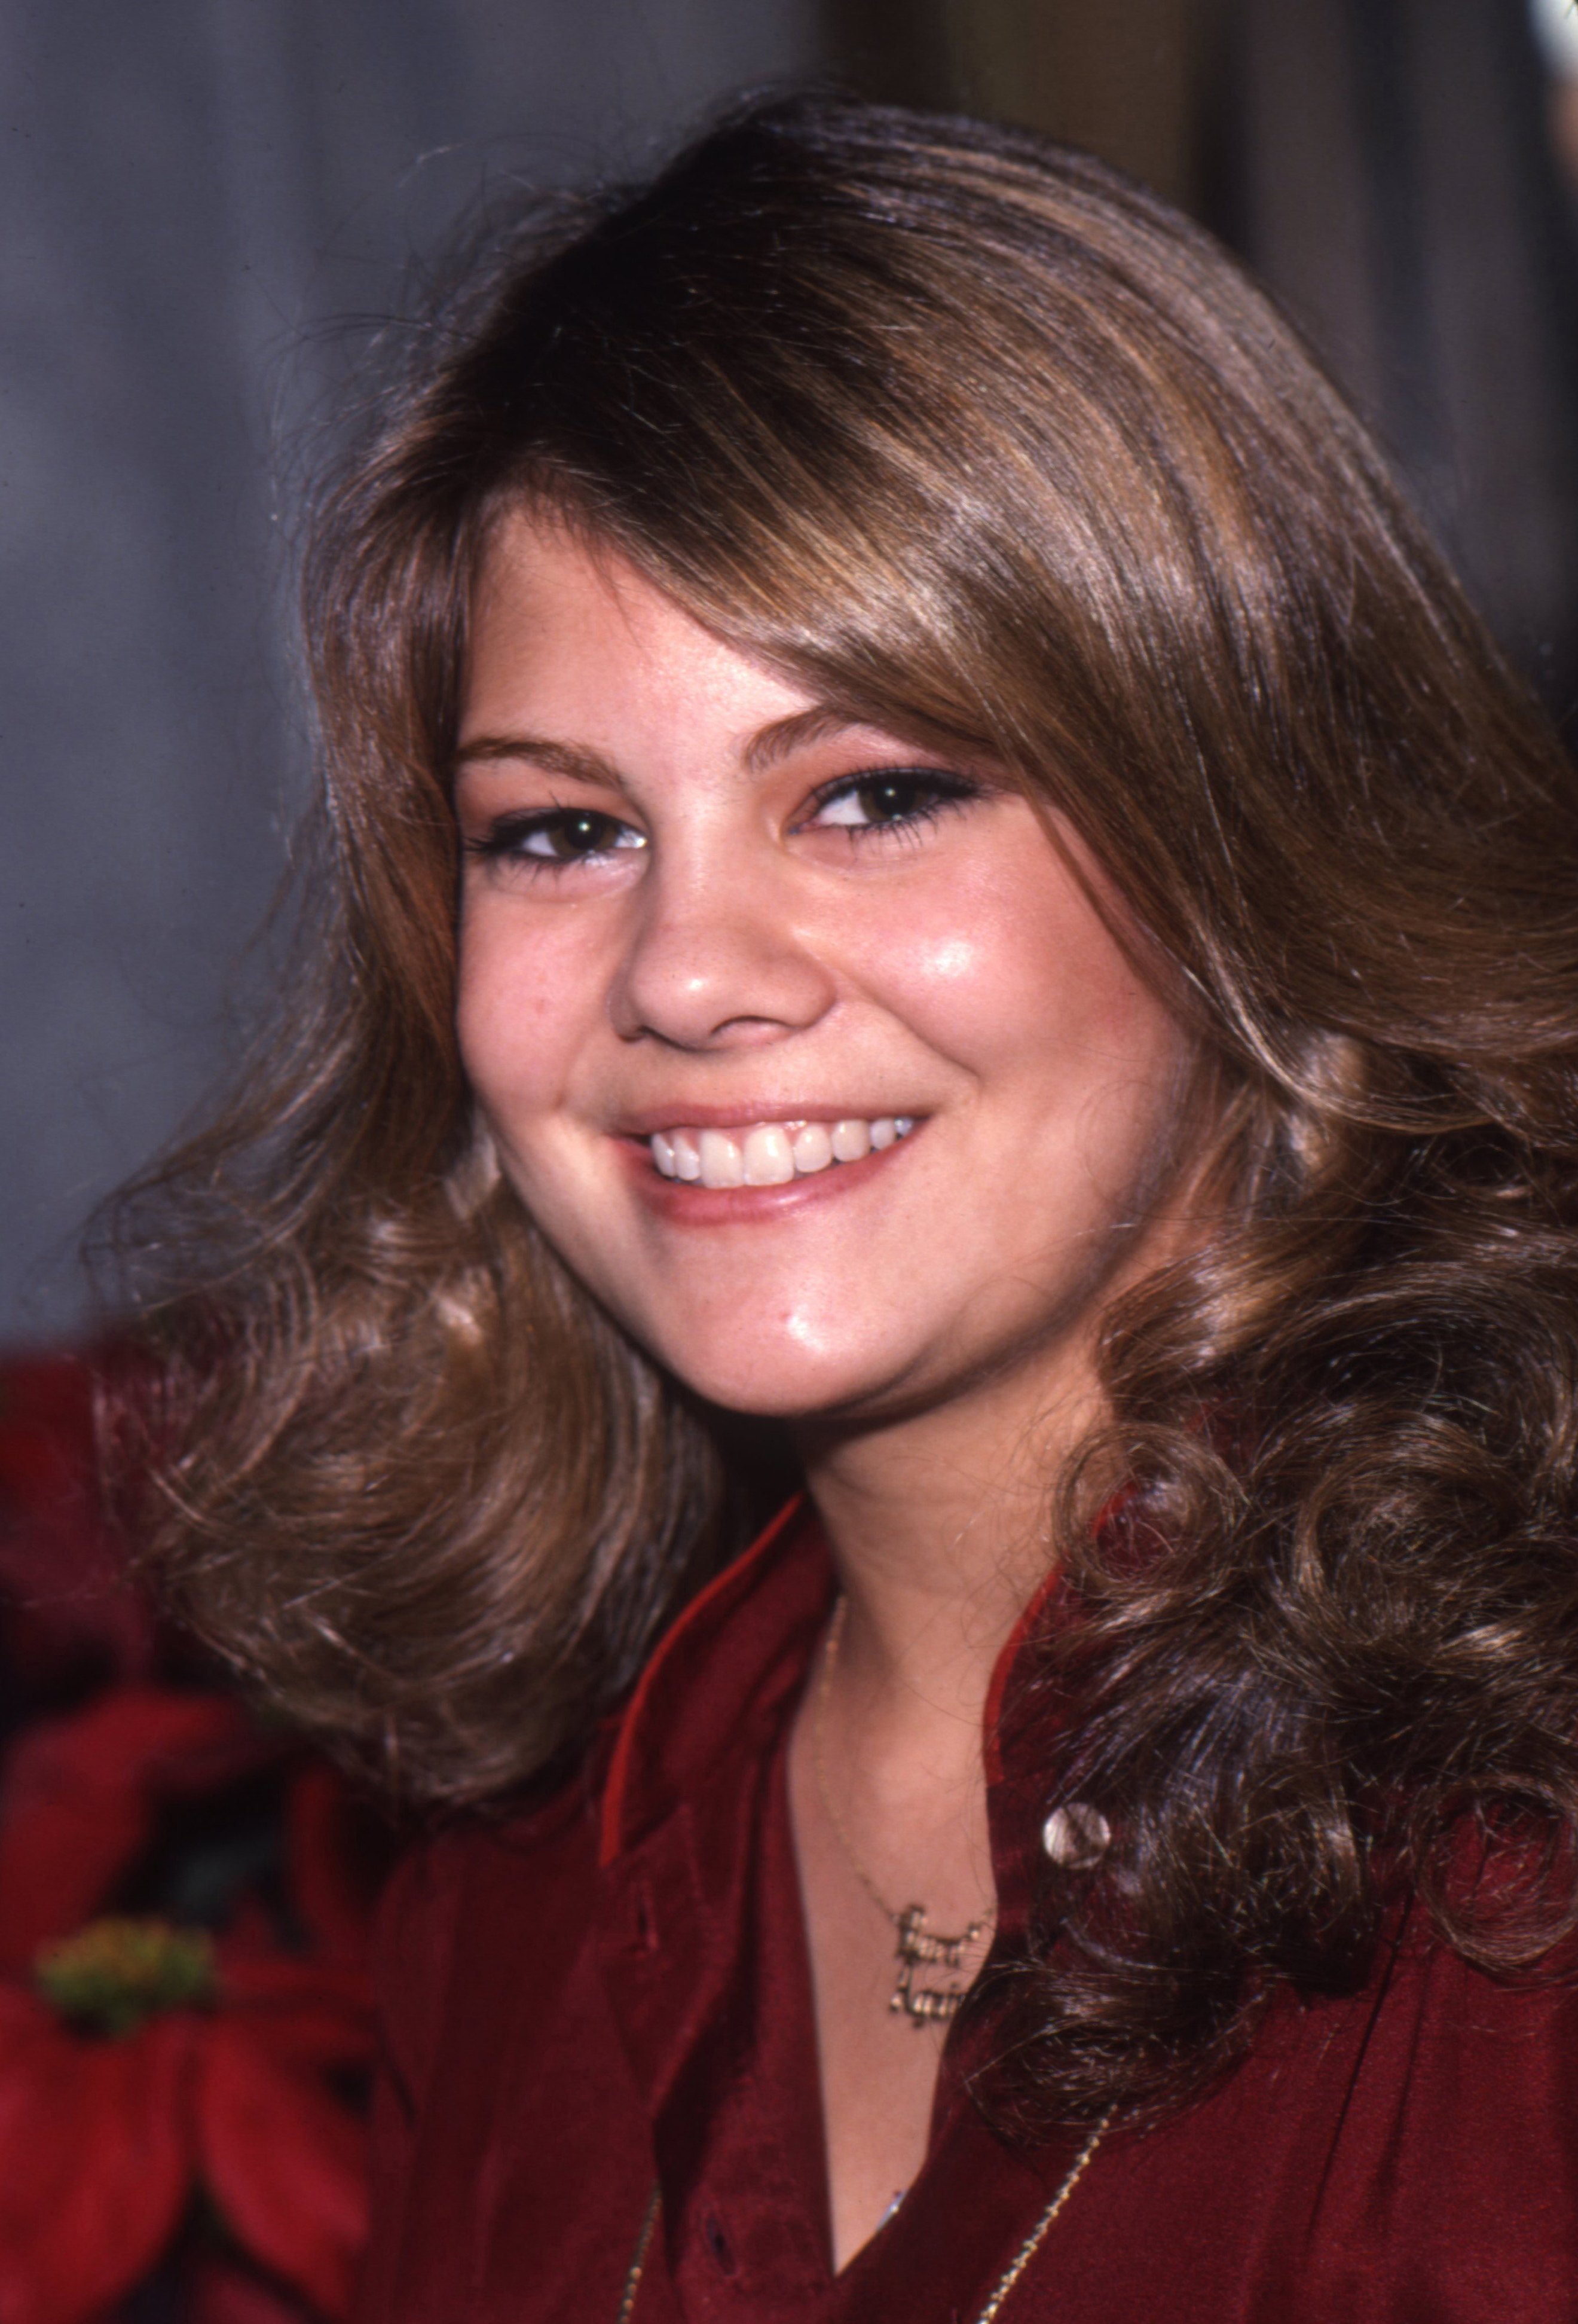 Lisa Whelchel in Los Angeles in 1990 | Source: Getty Images